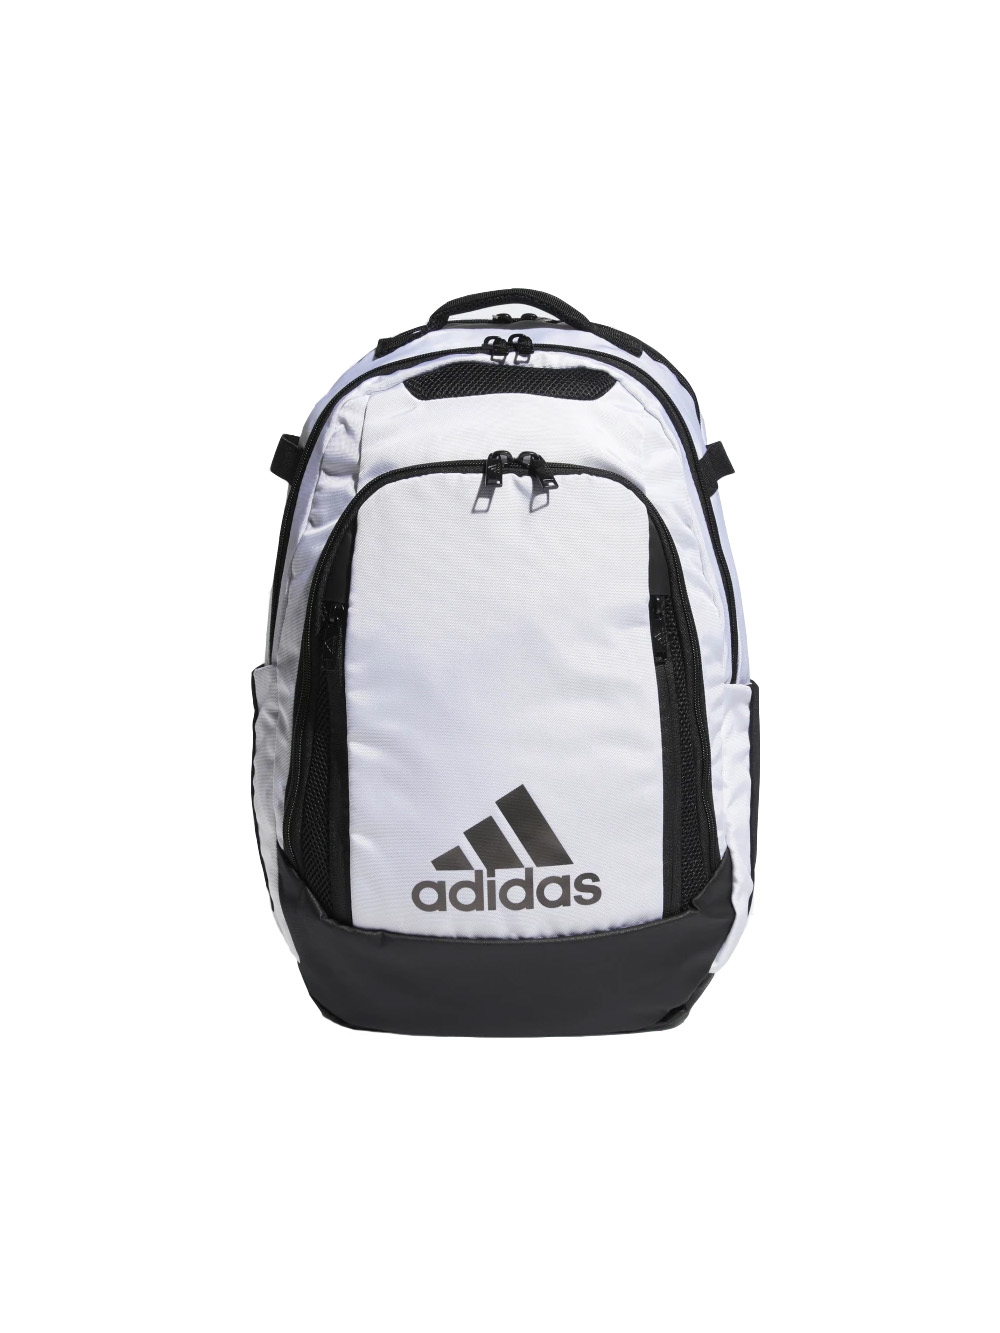 adidas 5 star backpack